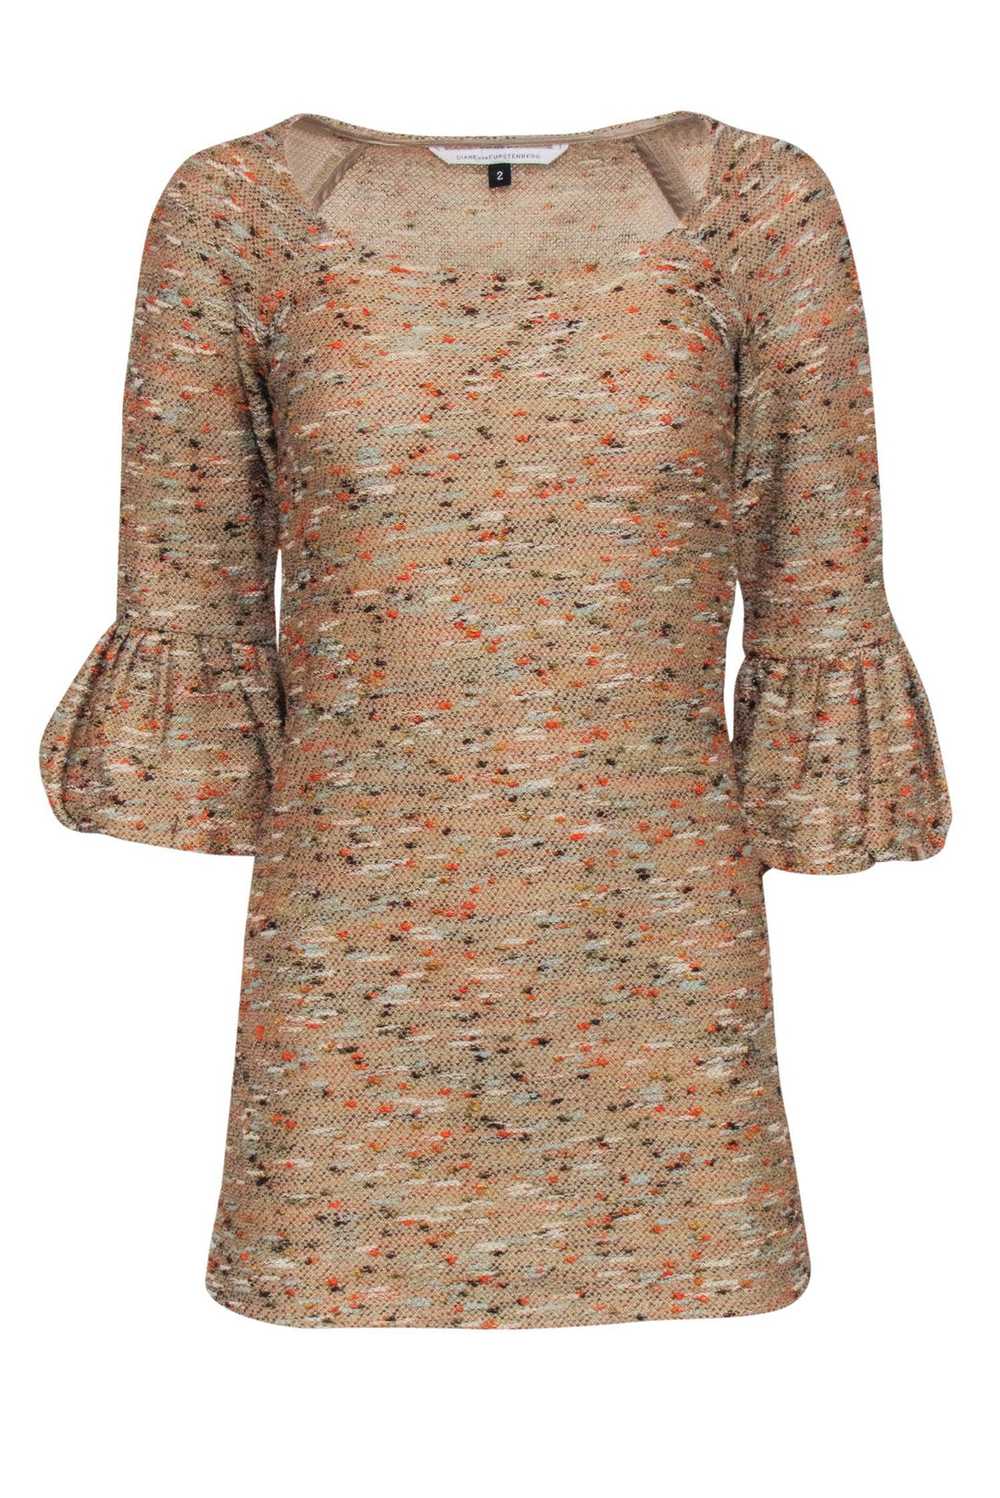 Diane von Furstenberg - Tan & Multi Color Tweed B… - image 1